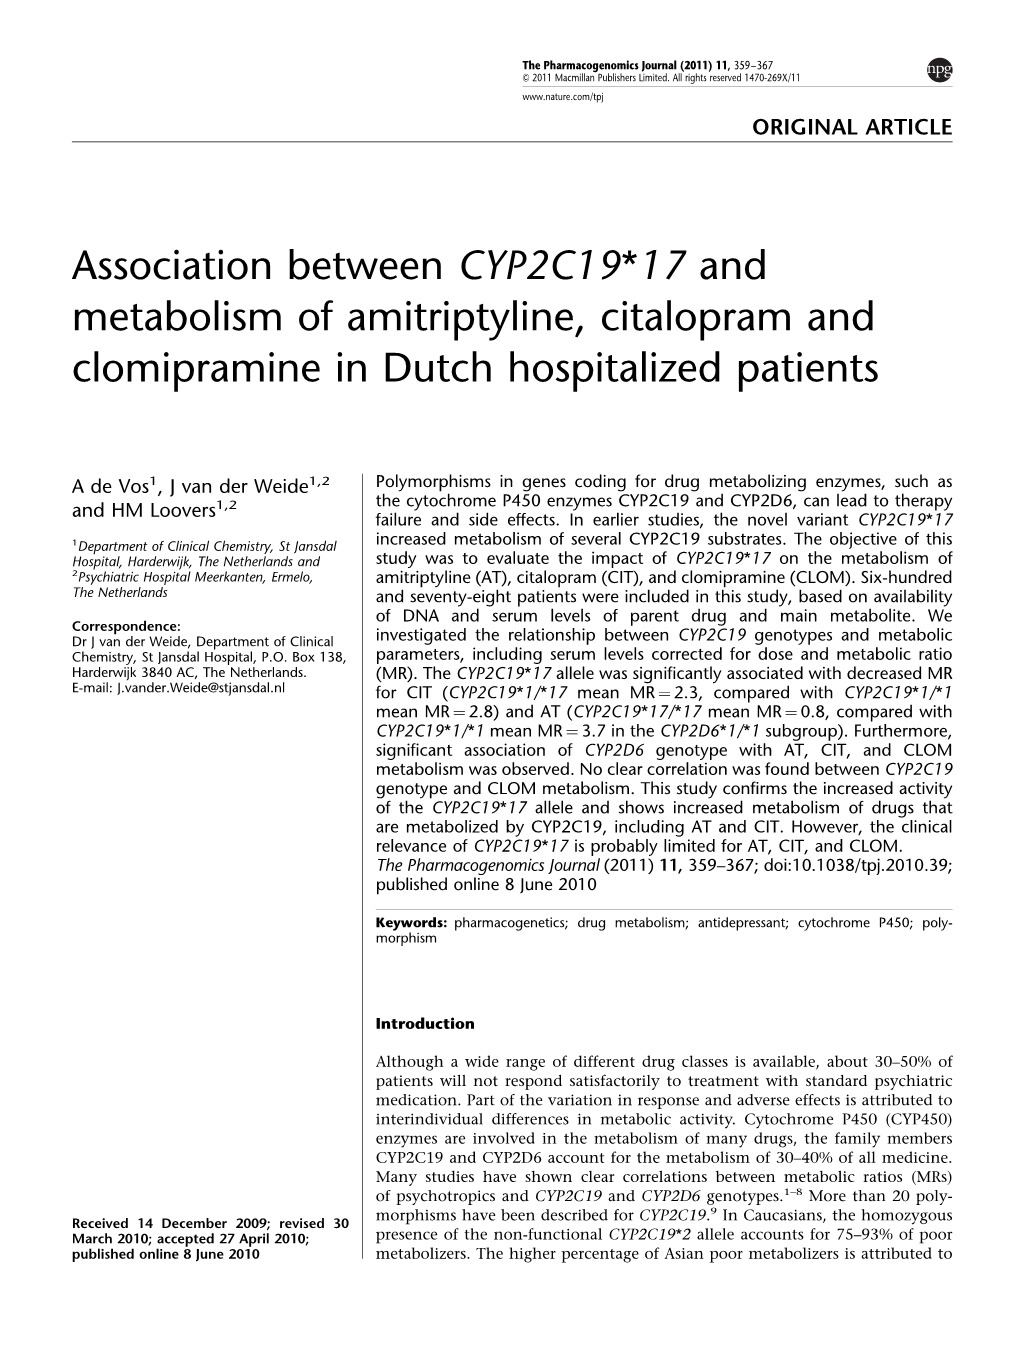 Association Between CYP2C19* 17 and Metabolism of Amitriptyline